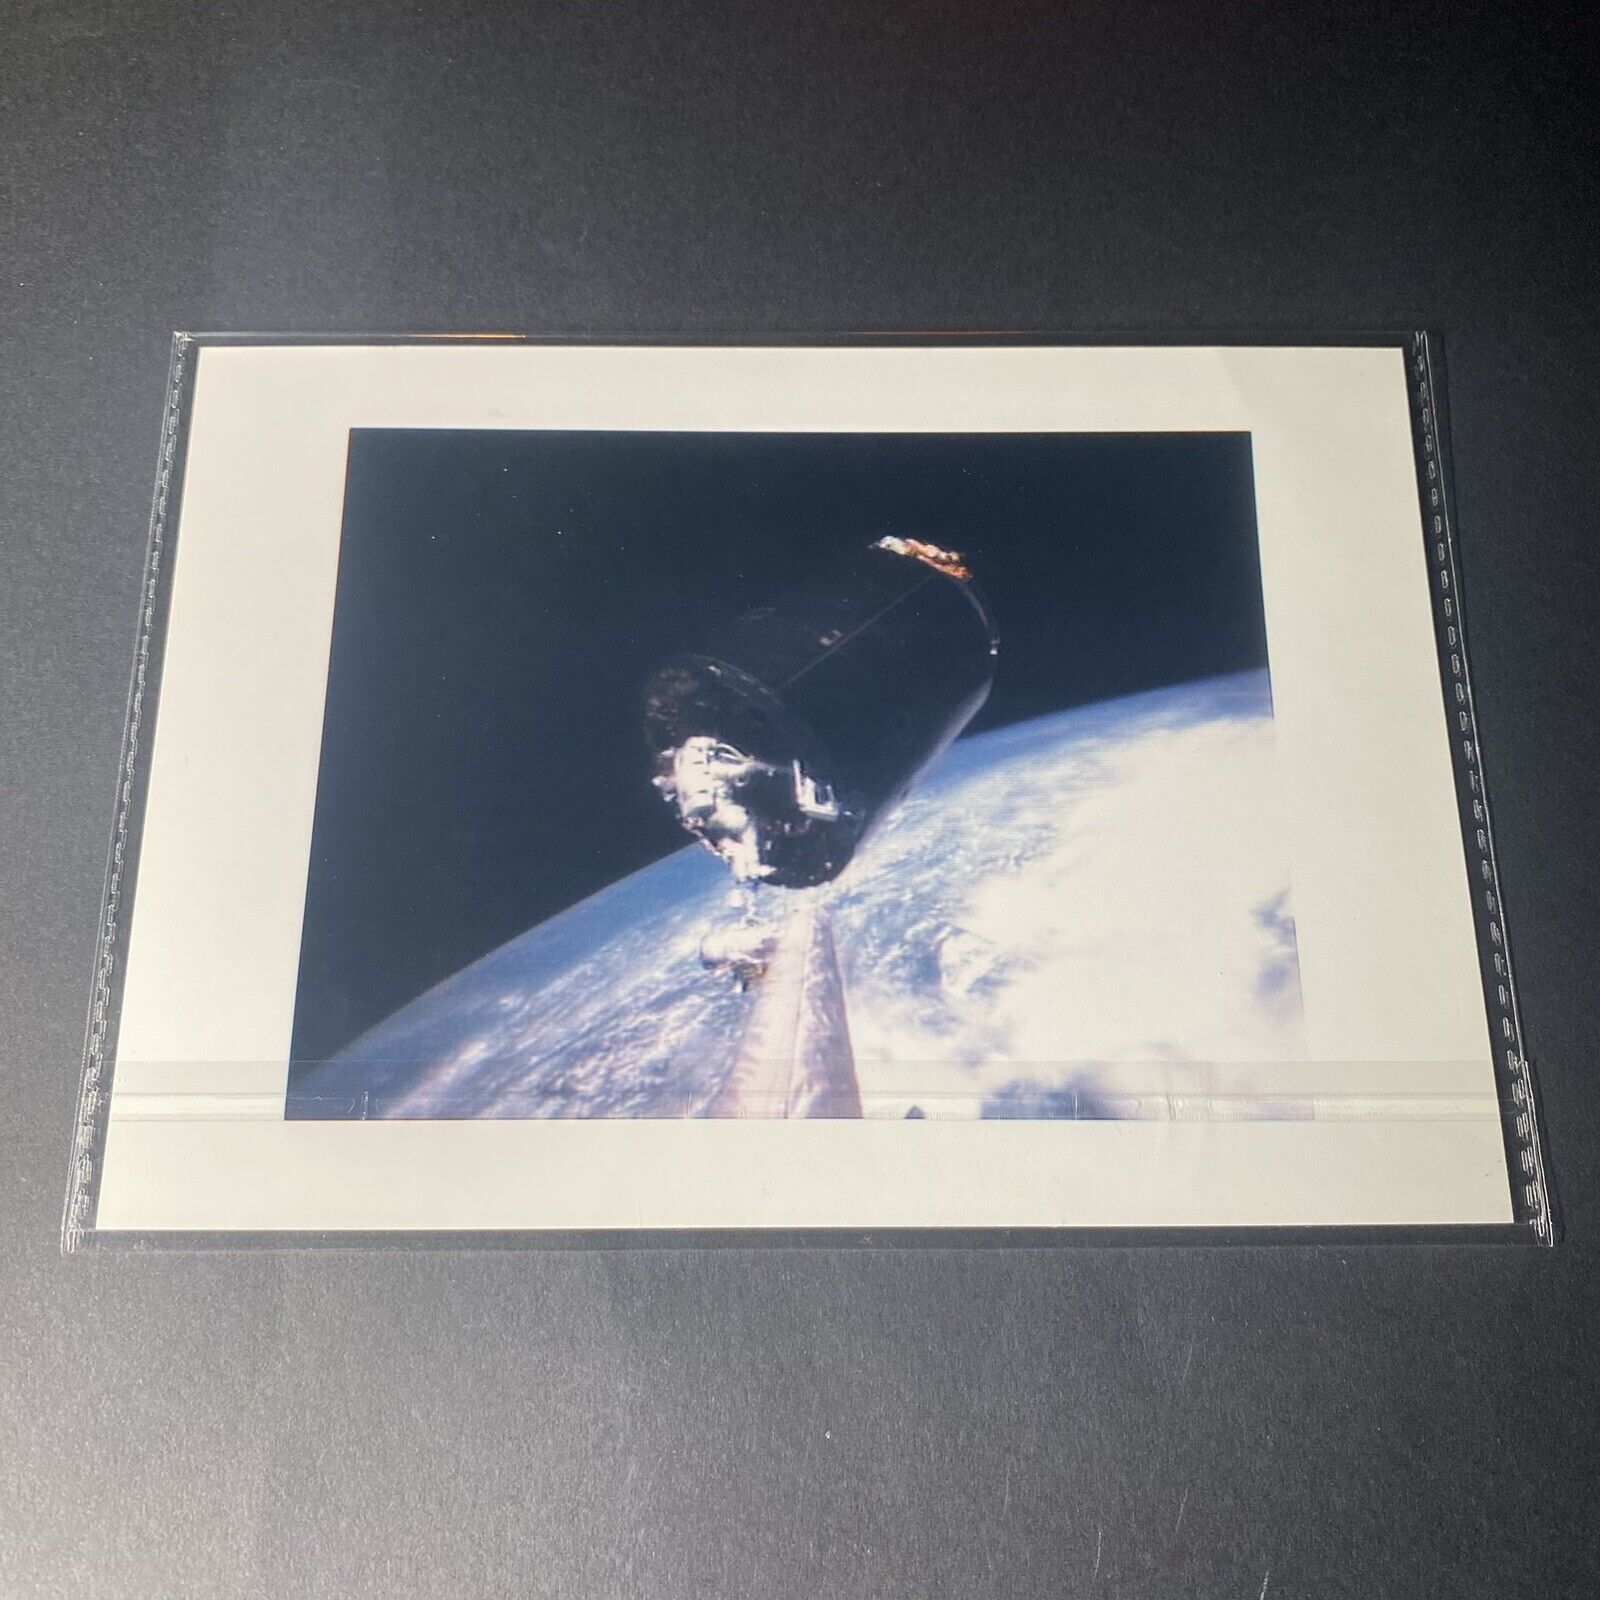 Official NASA Photo 92 Endeavor STS-49 Heib space walk intelsat VI satellite #1